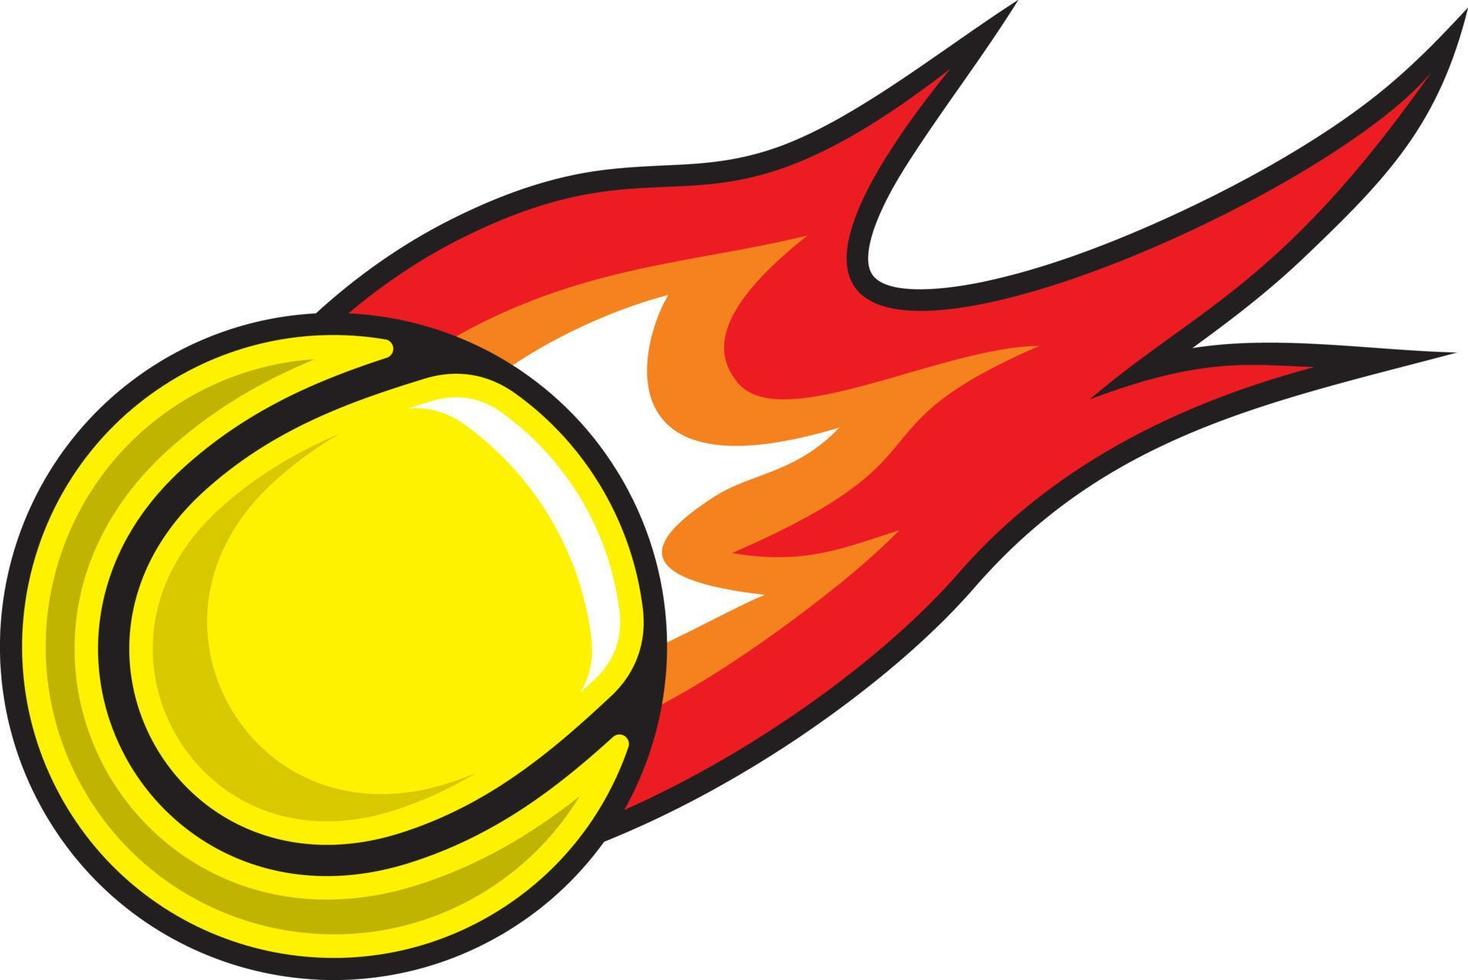 palla da tennis in fiamme vettore